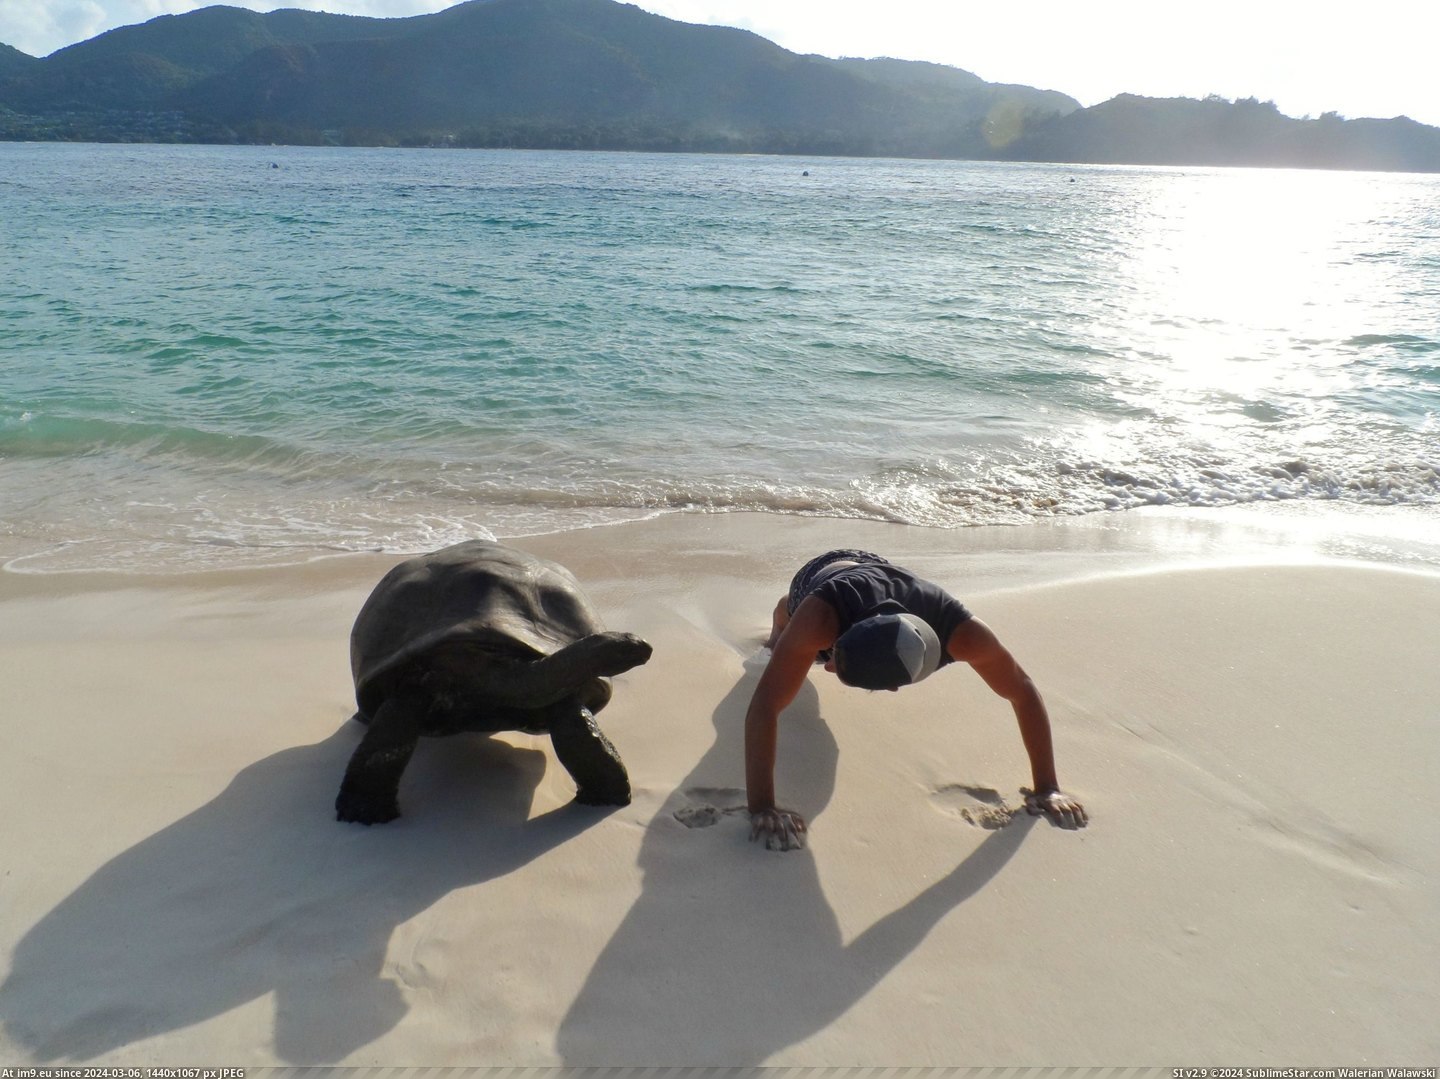 #Small #Island #Workout #Buddy #Boyfriend [Pics] Currently volunteering on a small island in the Seychelles - my boyfriend found a new workout buddy! Pic. (Bild von album My r/PICS favs))